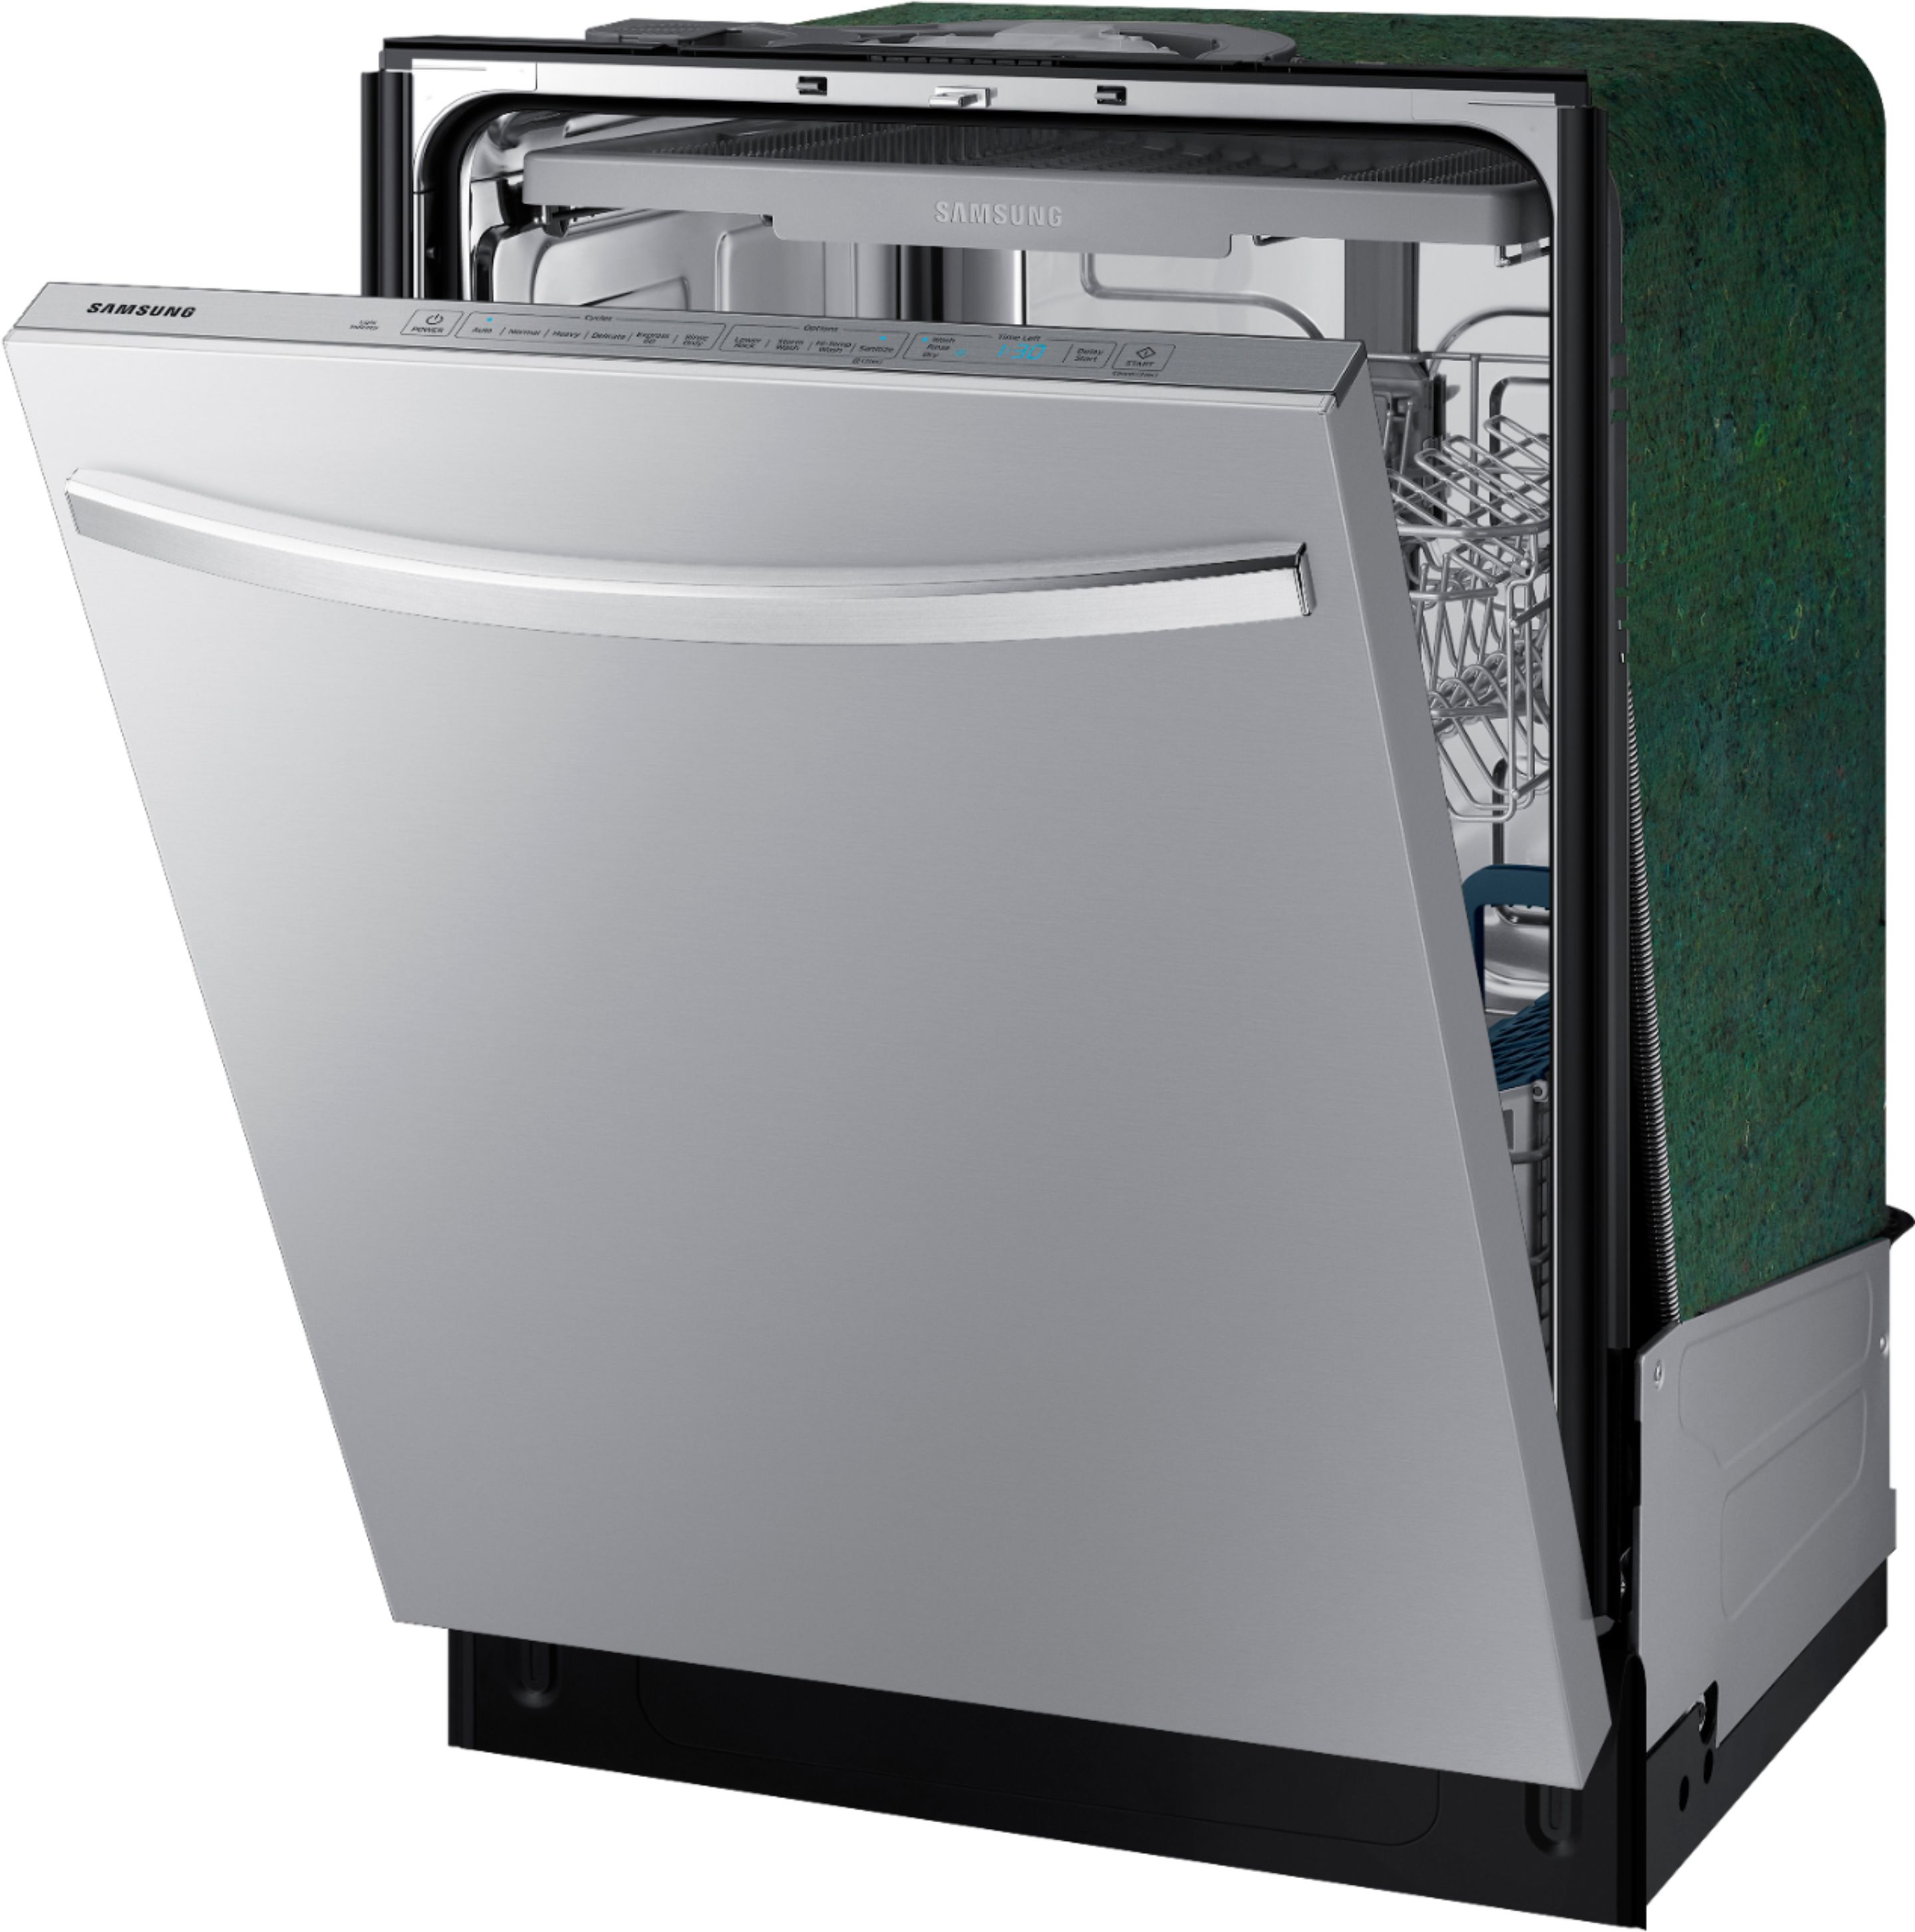 Samsung 24 Front Control Built-In Dishwasher Black DW80N3030UB - Best Buy